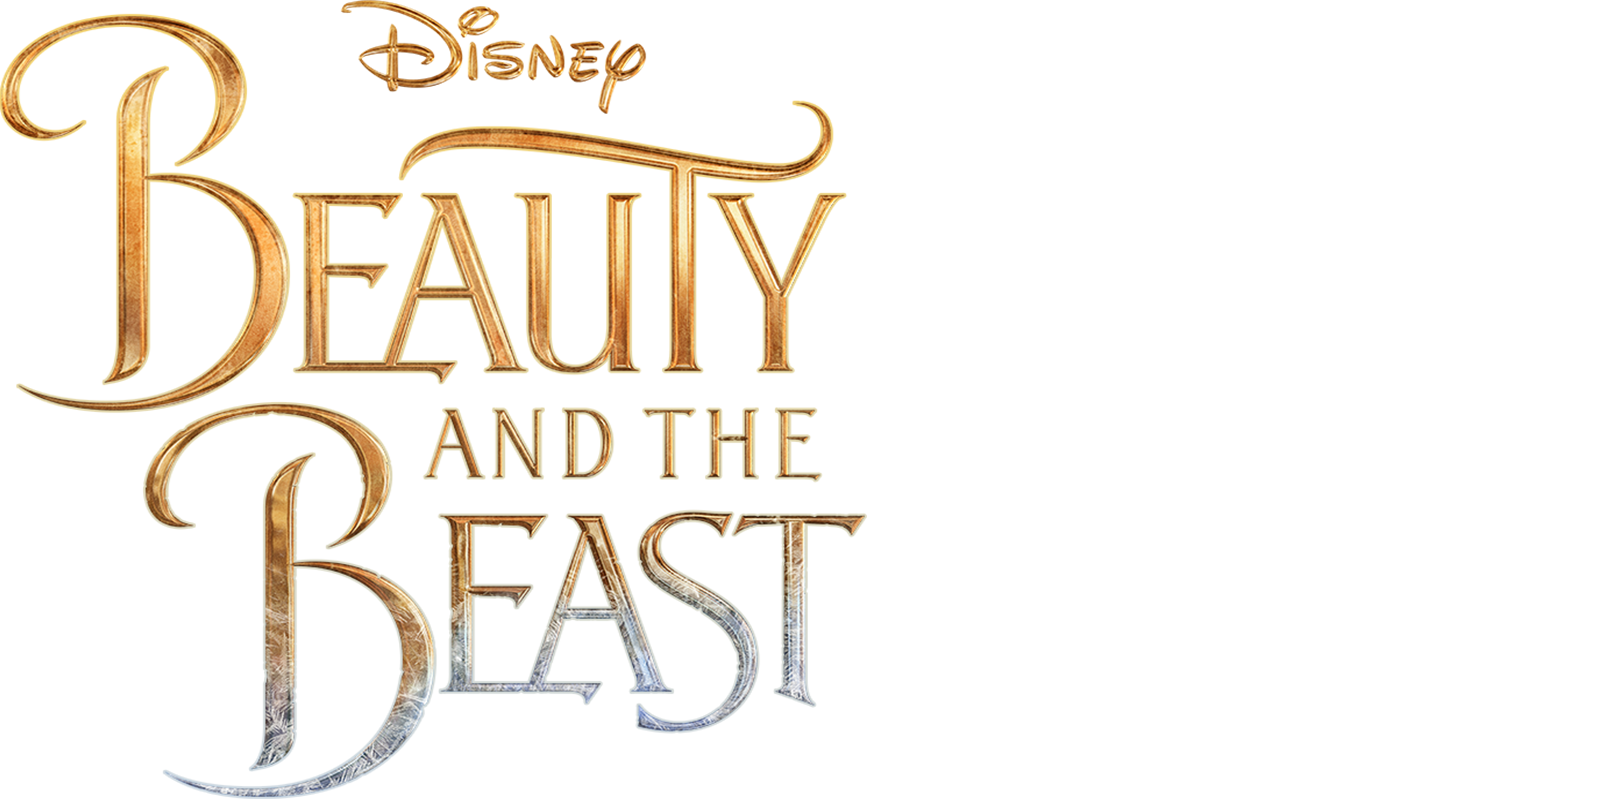 beauty and the beast 2017 full movie online free putlockers